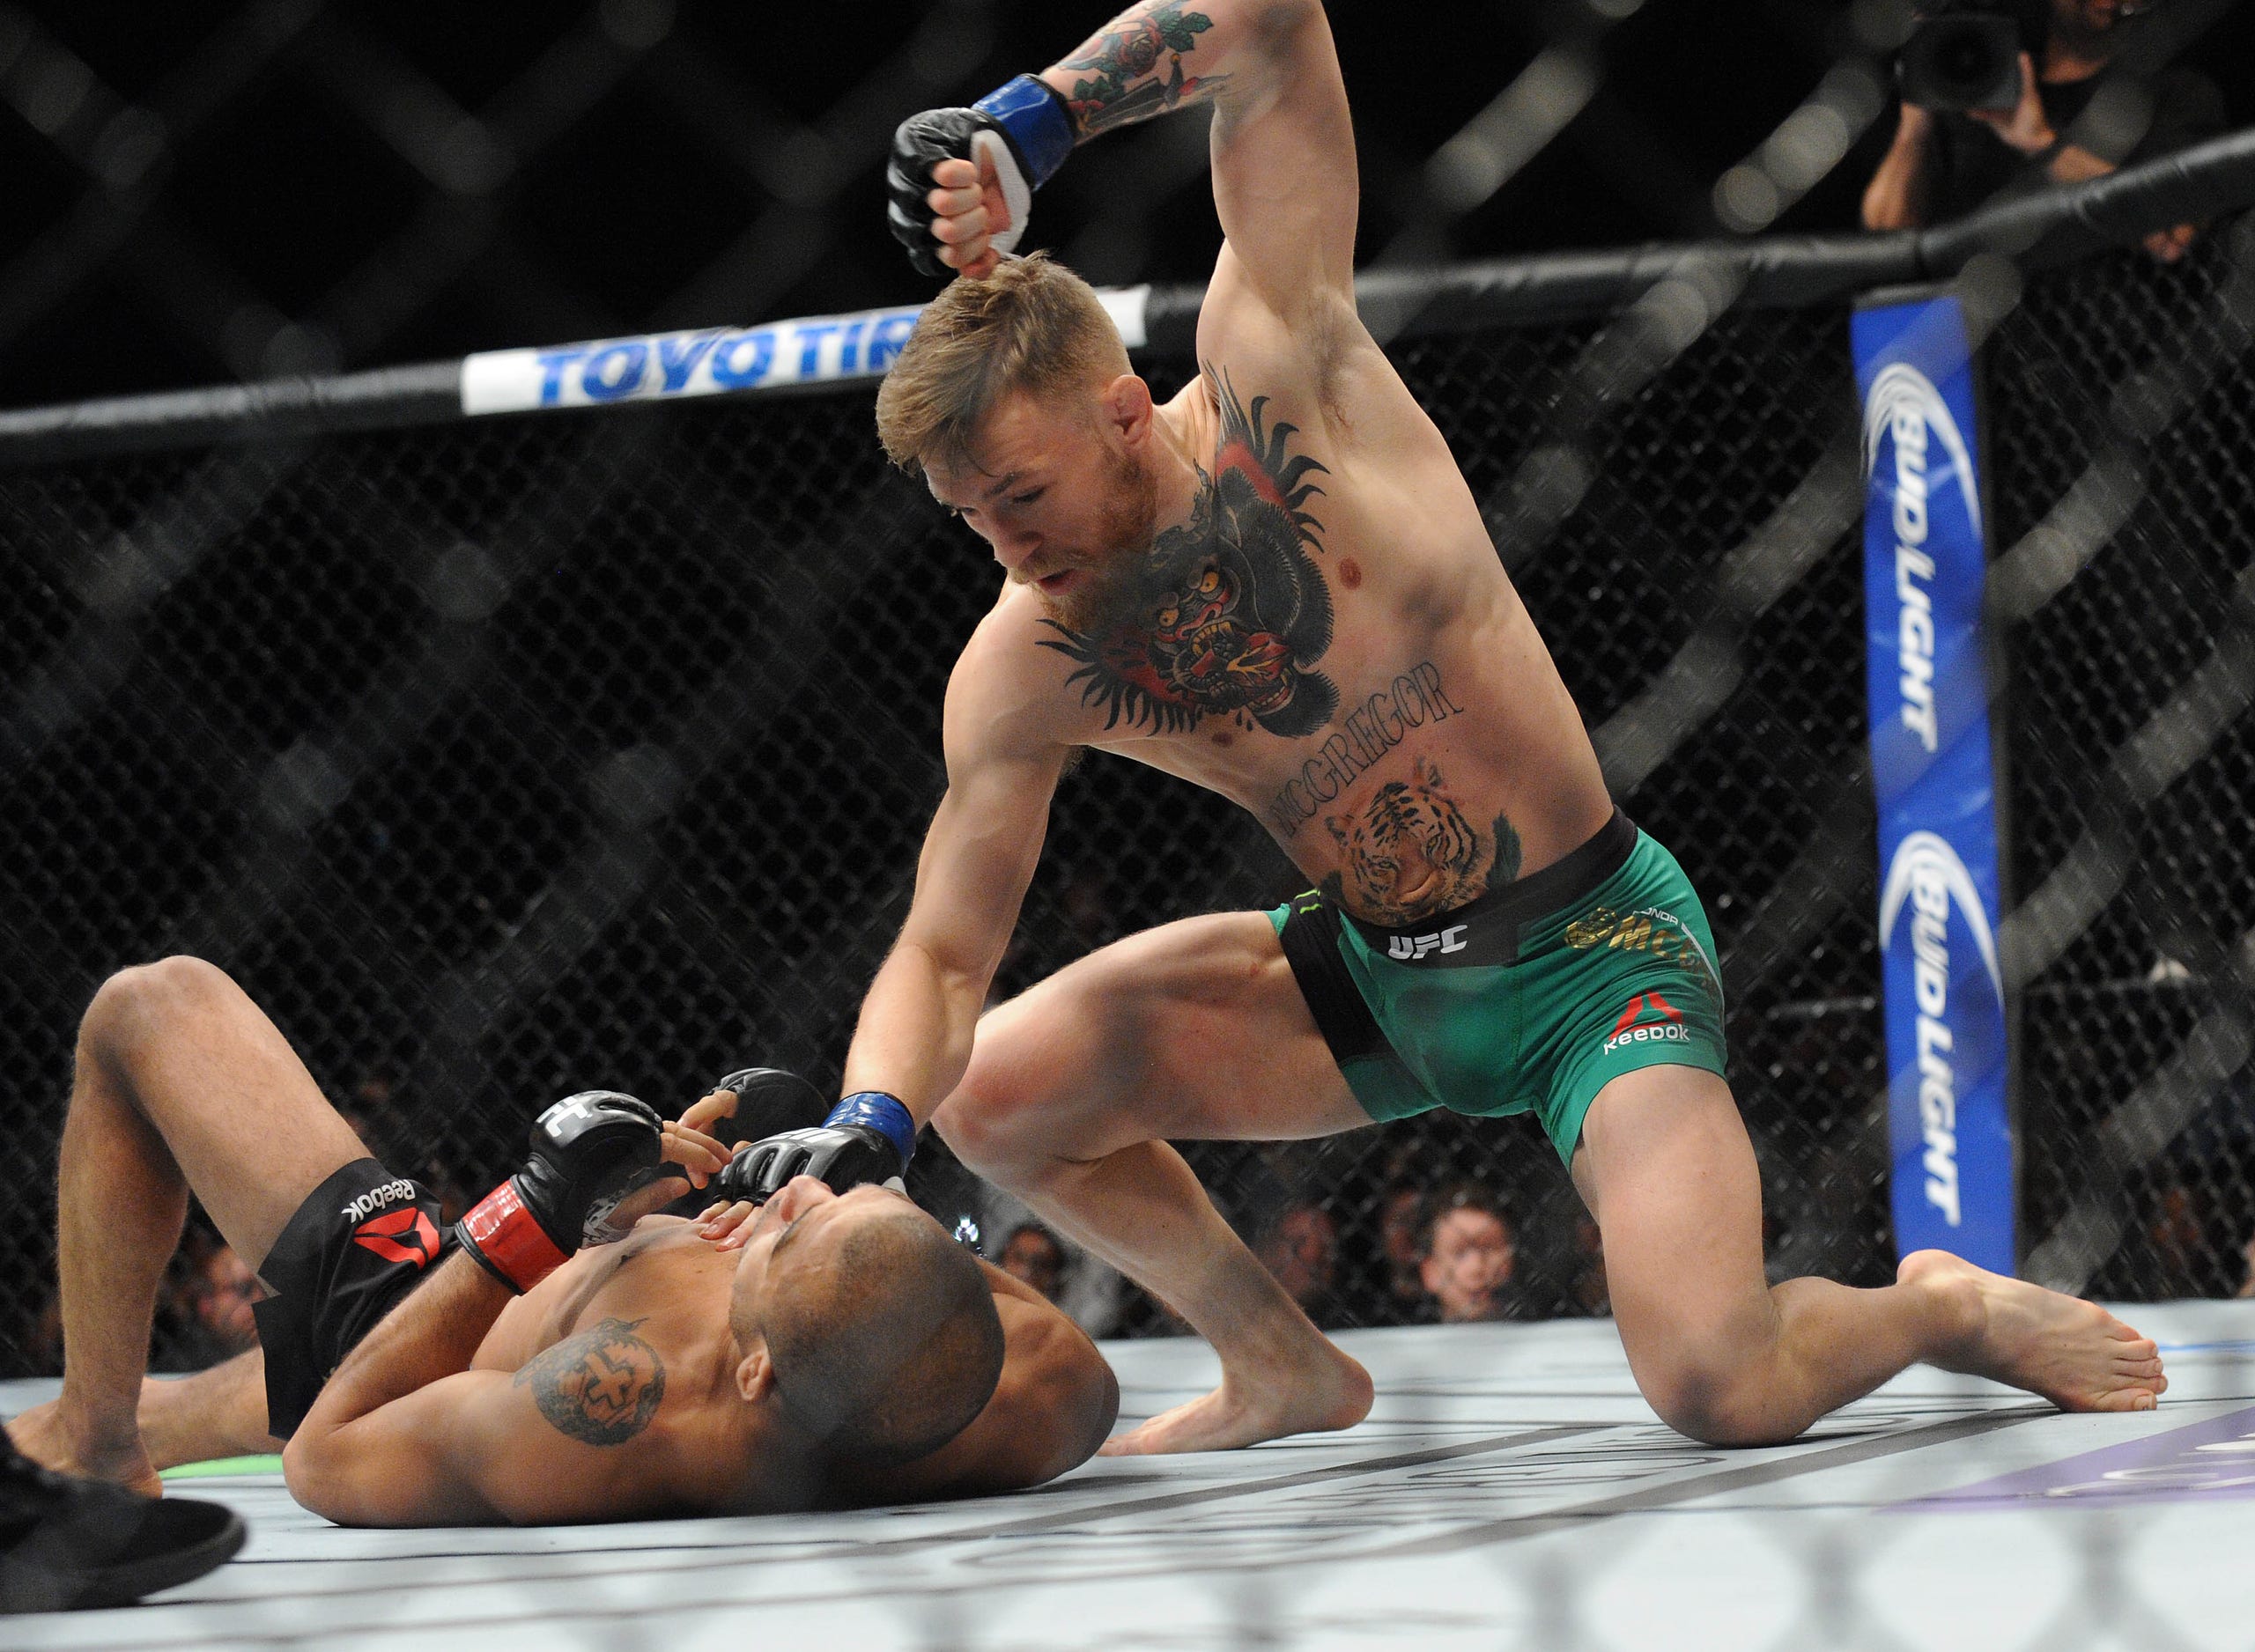 Grand emulsion musikkens Best of UFC 194: Jose Aldo vs. Conor McGregor